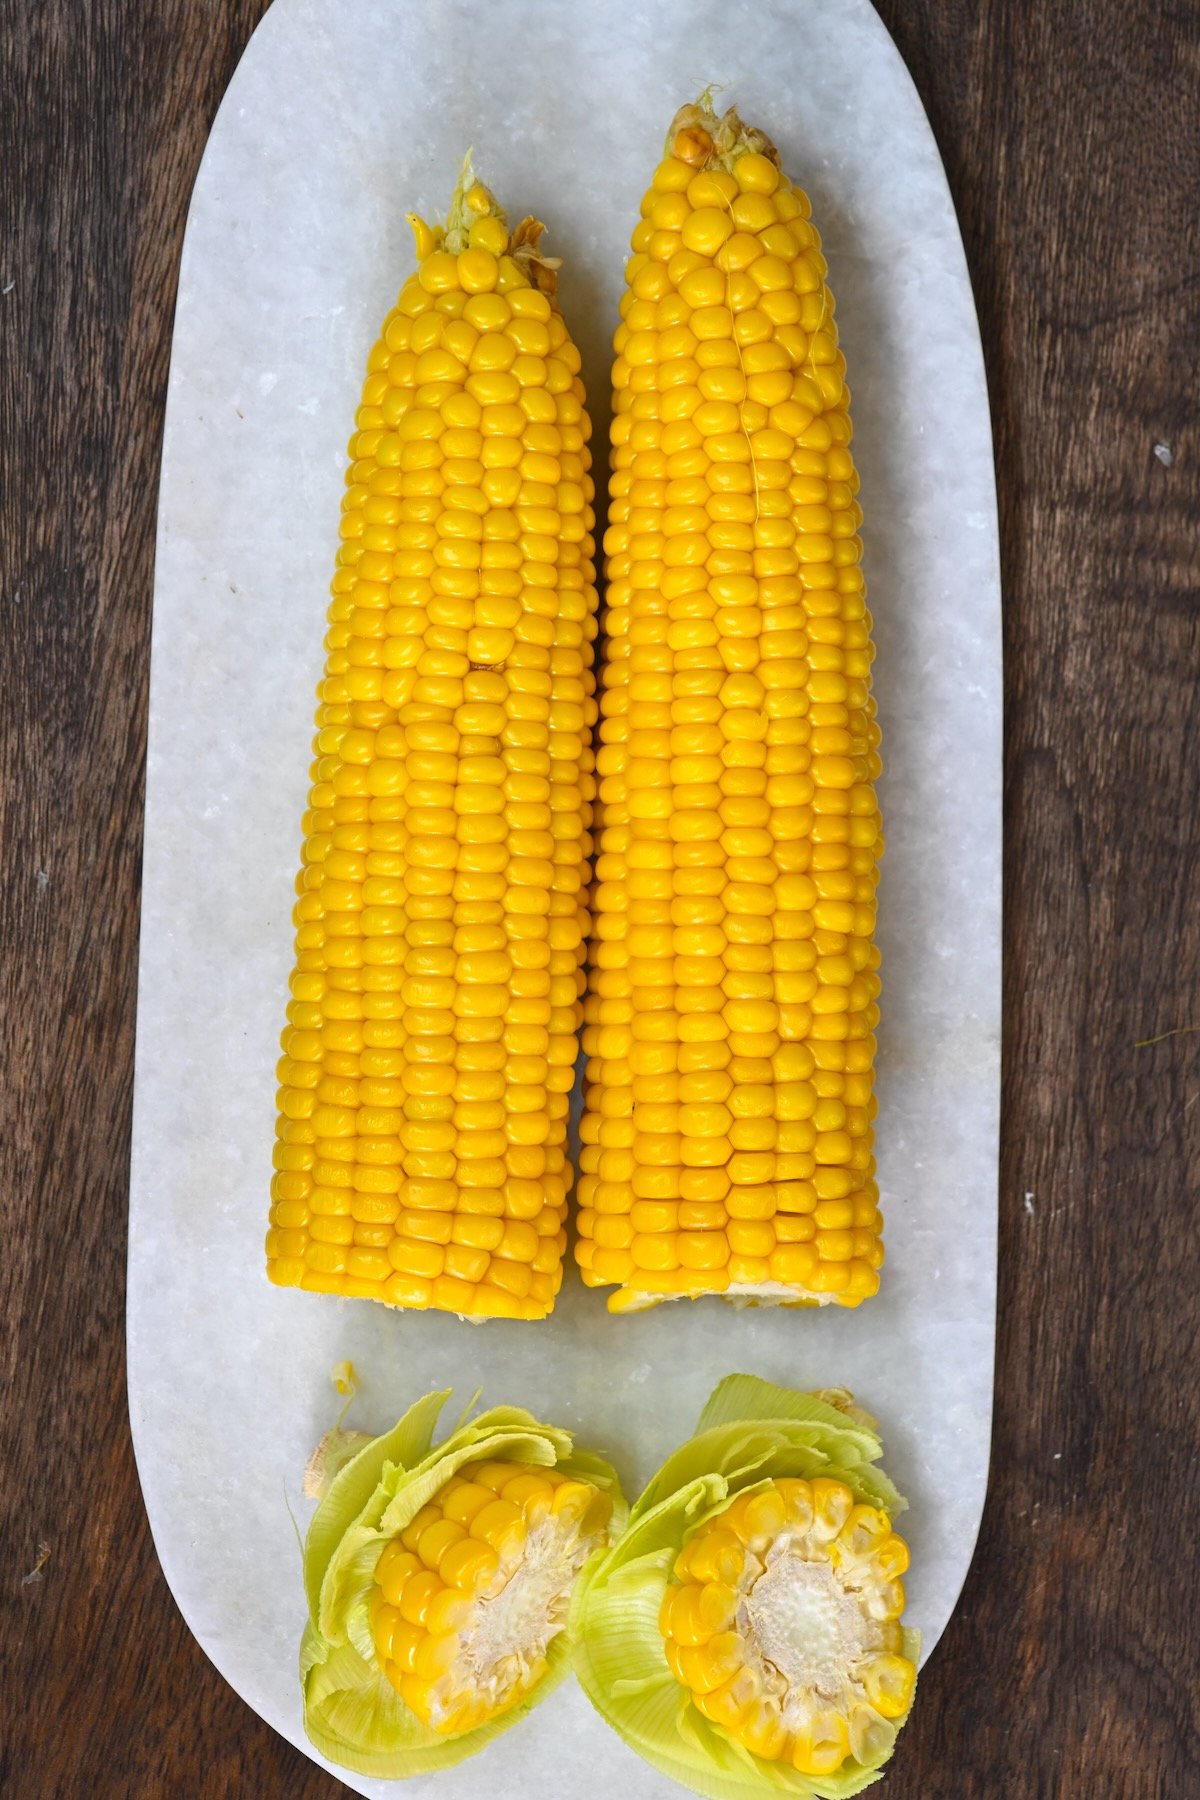 Two microwaved ears of corn